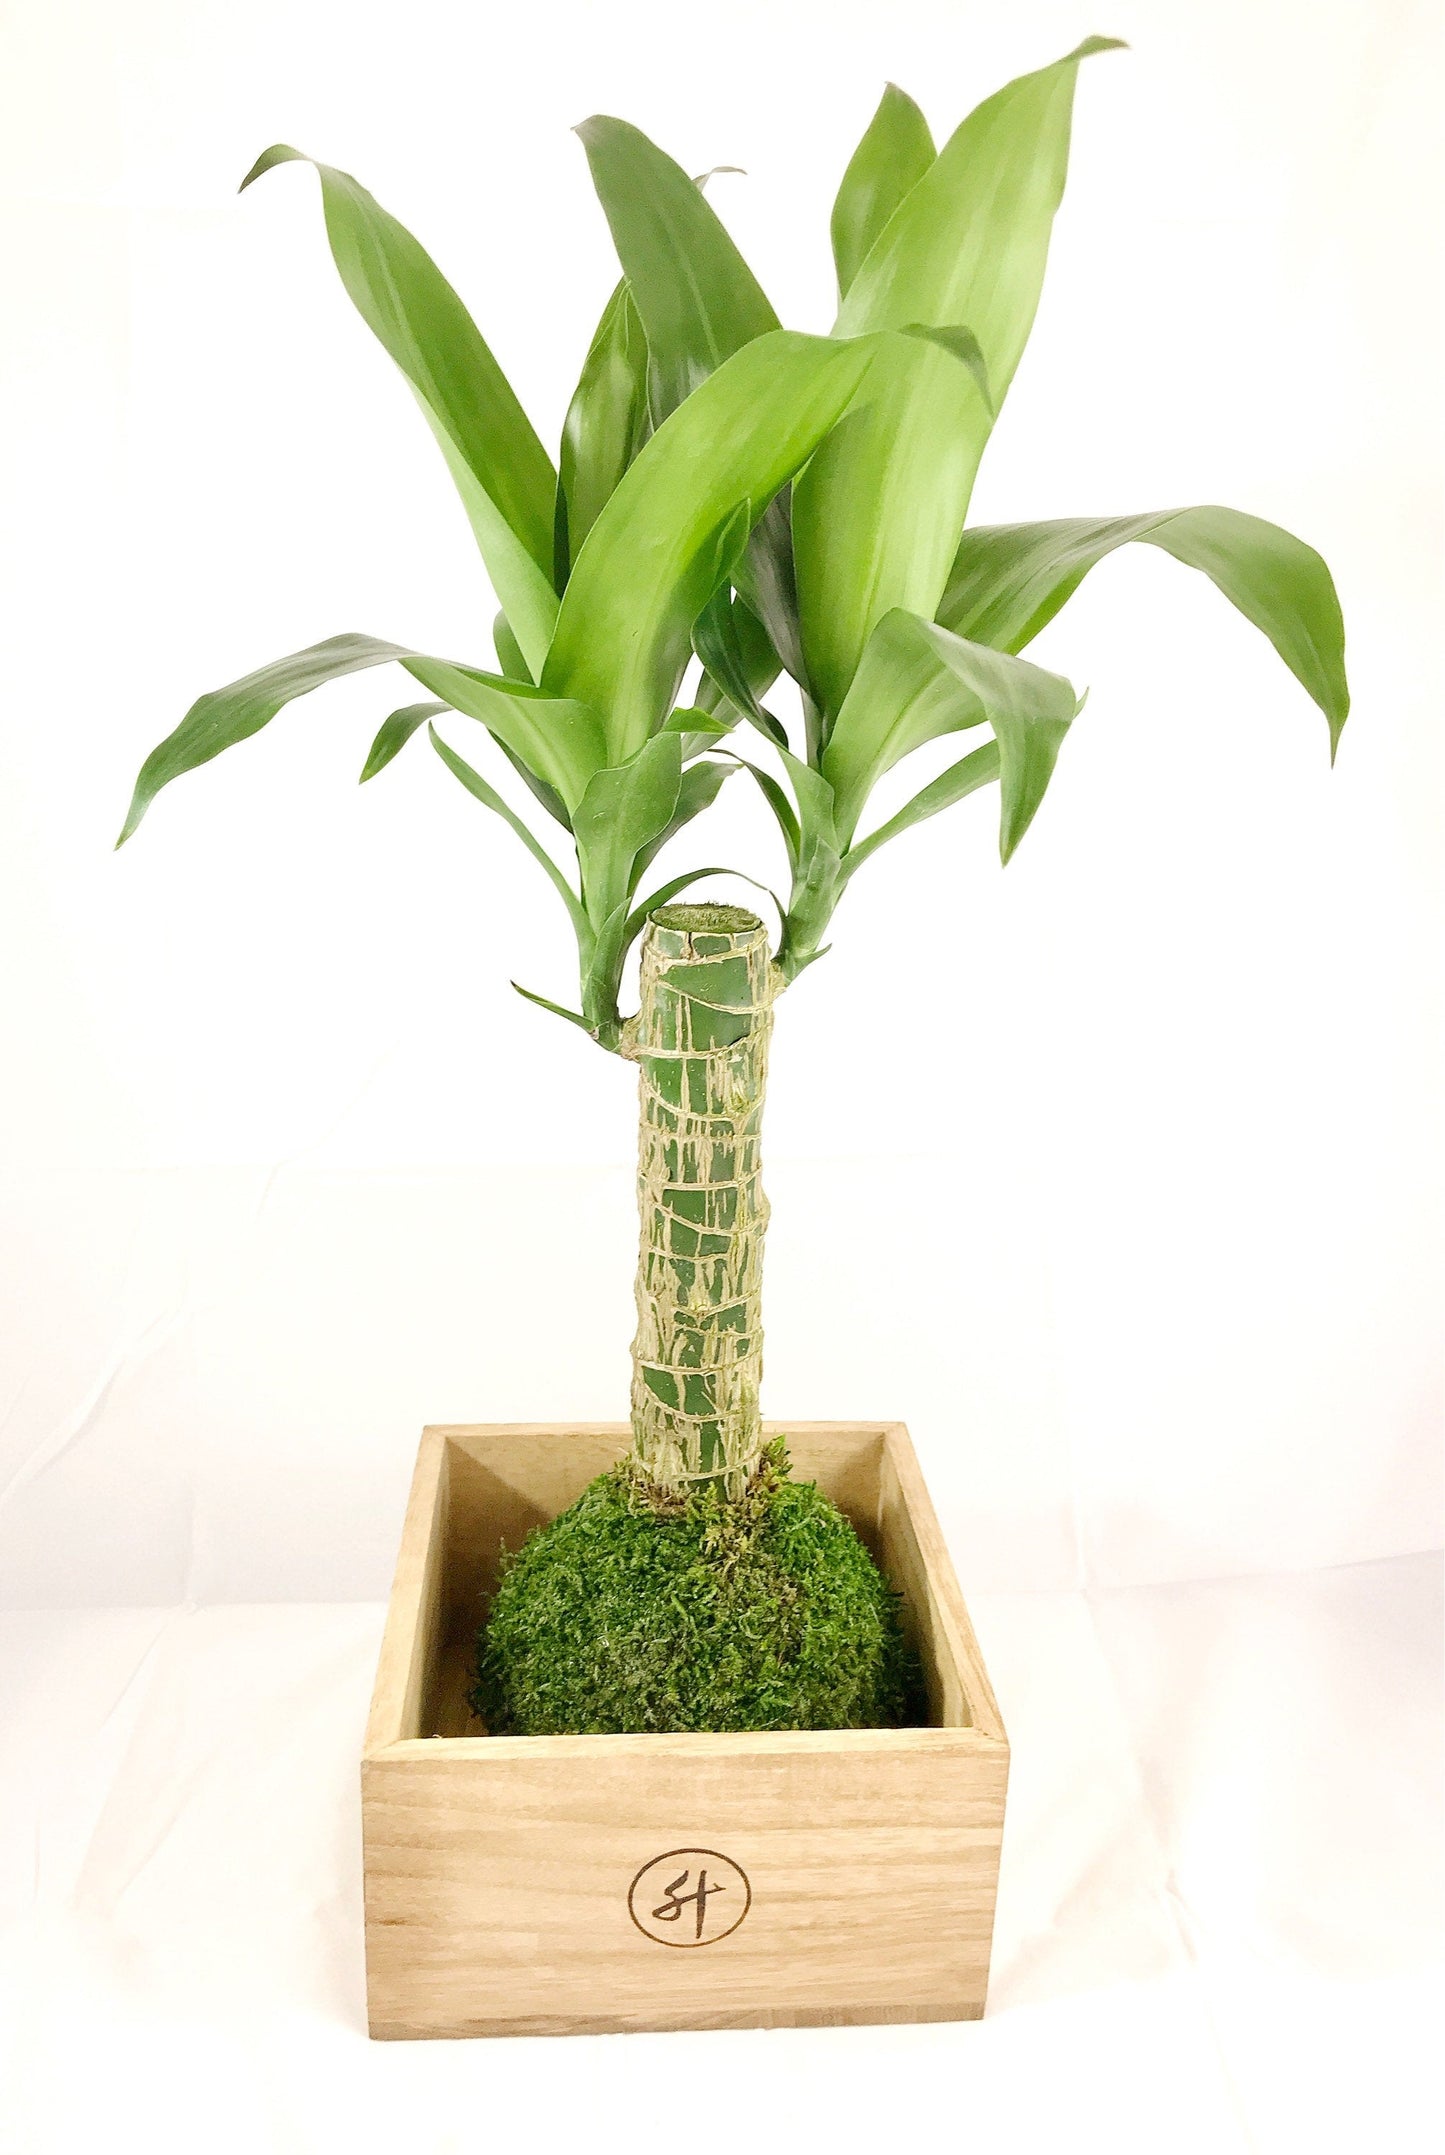 Dracaena yellow corn plant Kokedama - Moss ball, beautiful live light green combination color!